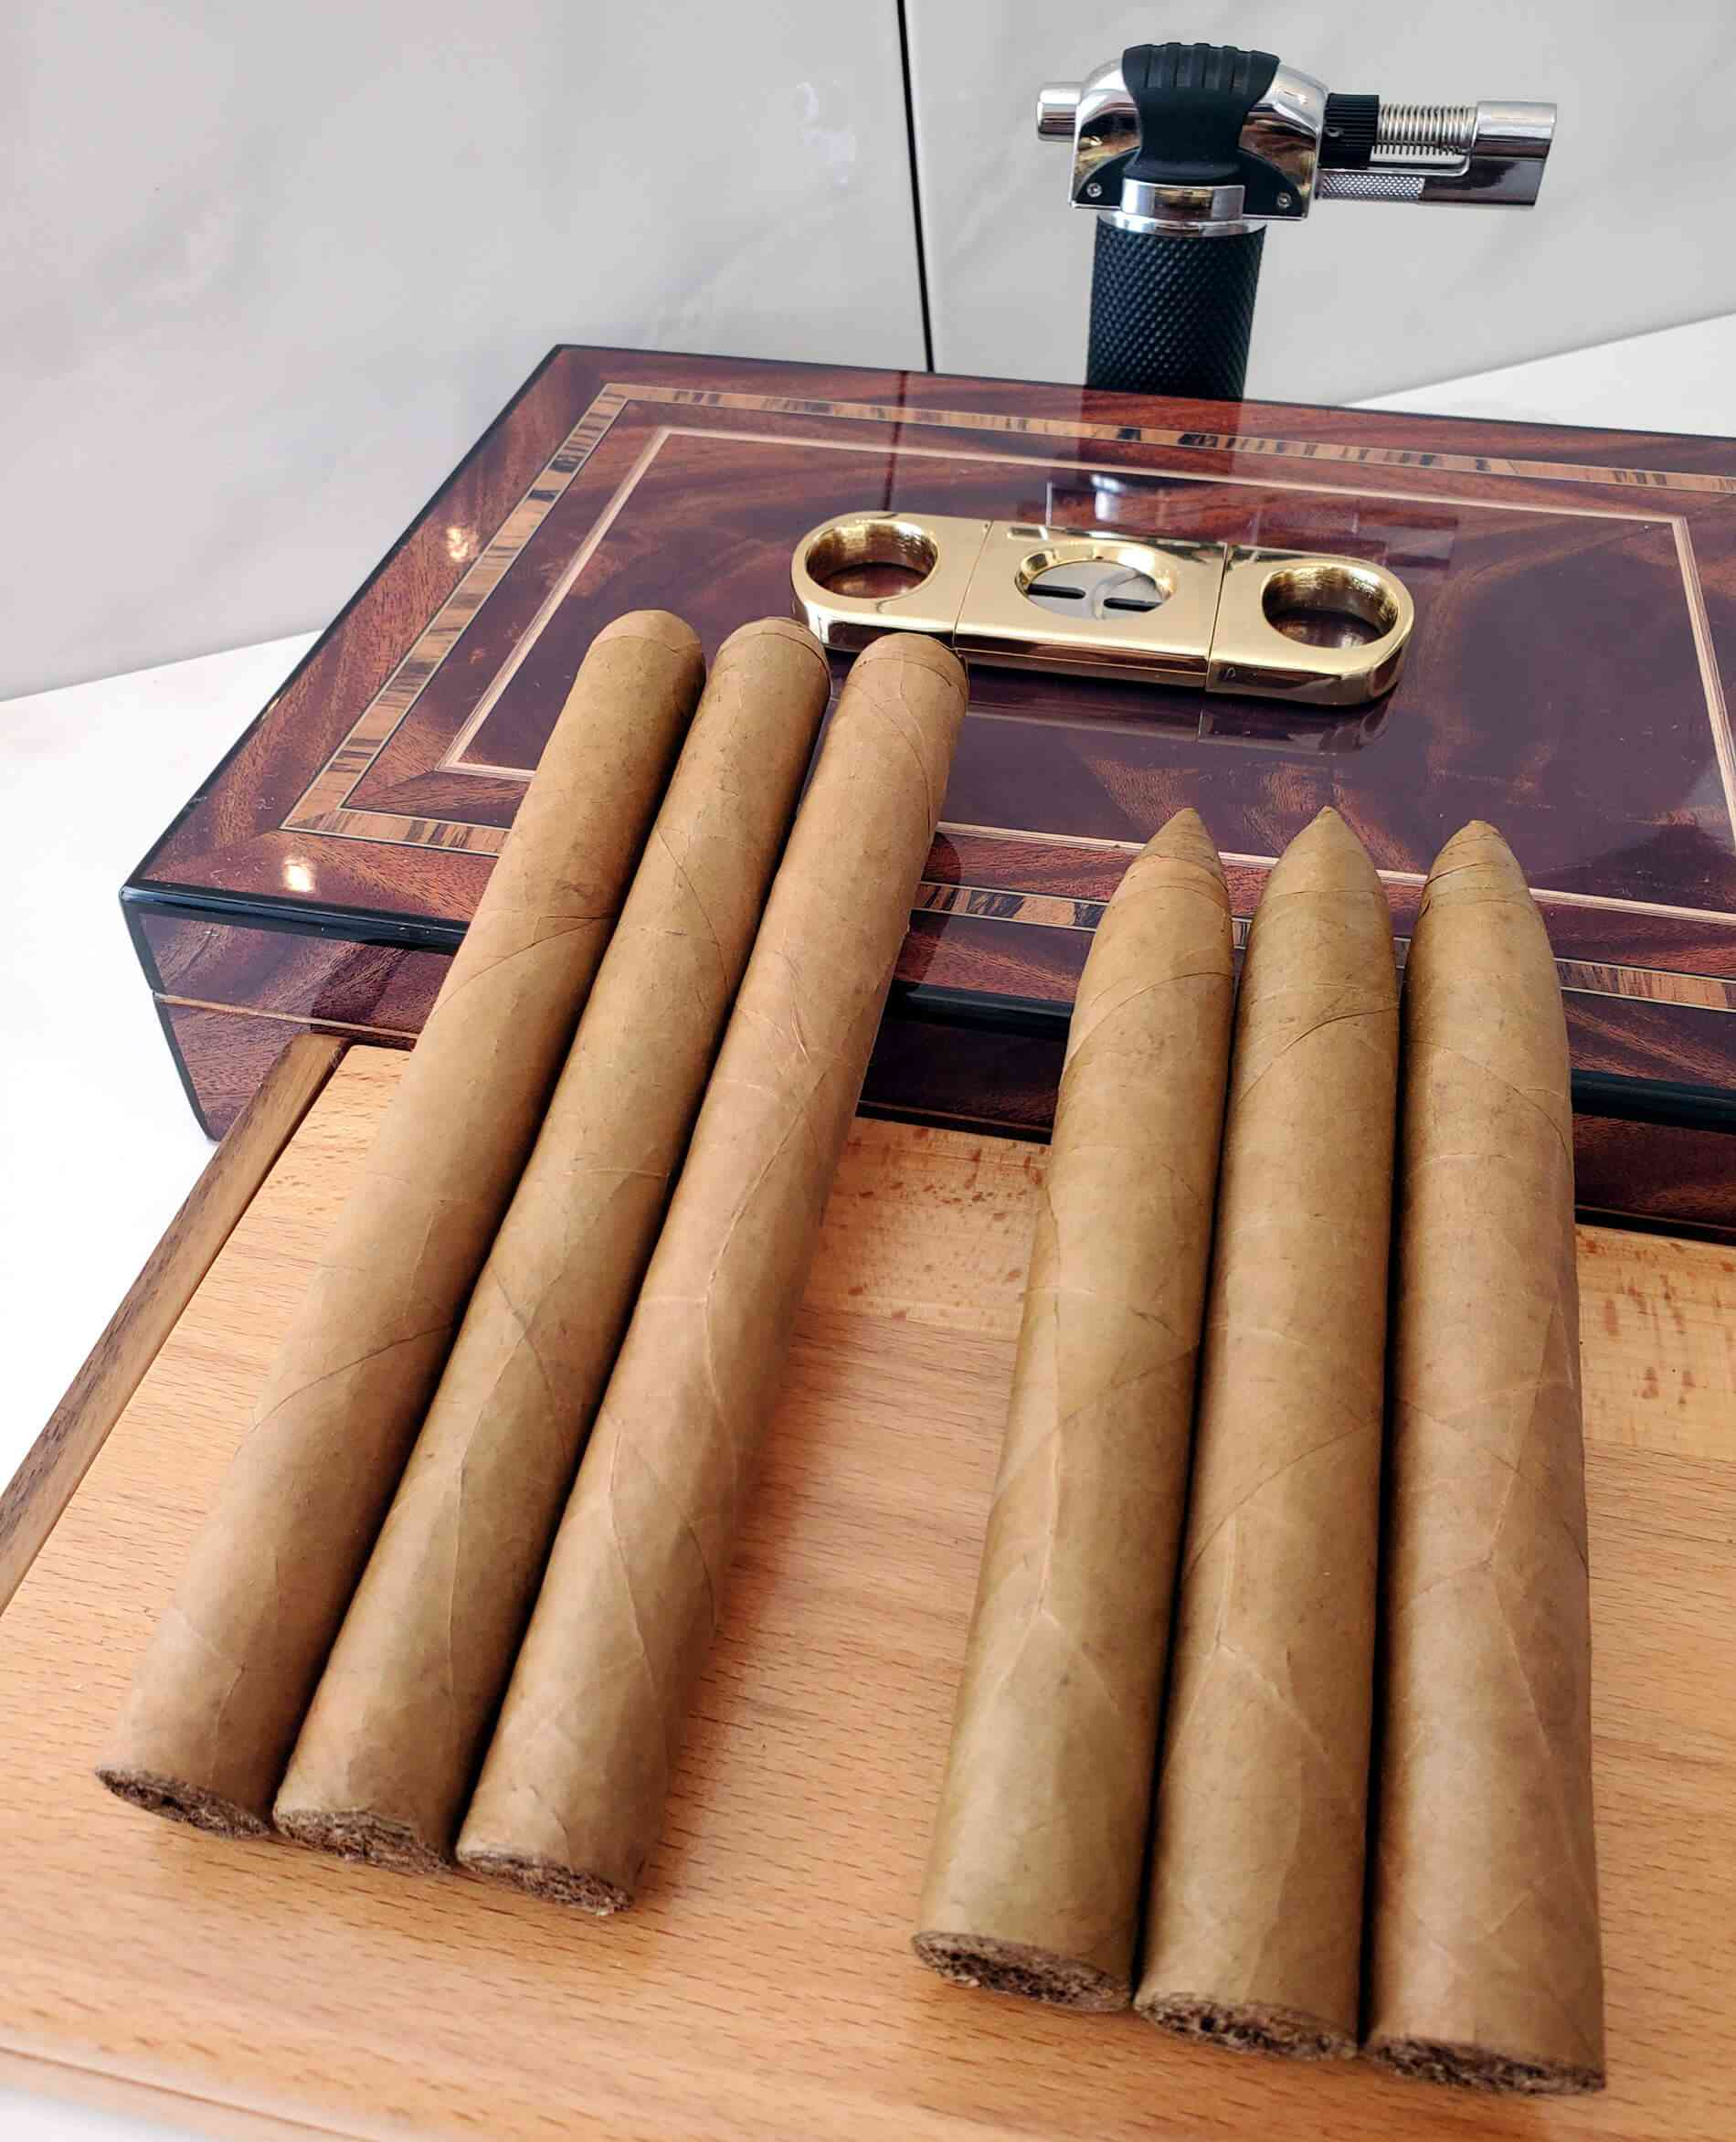 standard-premium-connecticut-personalized-cigars